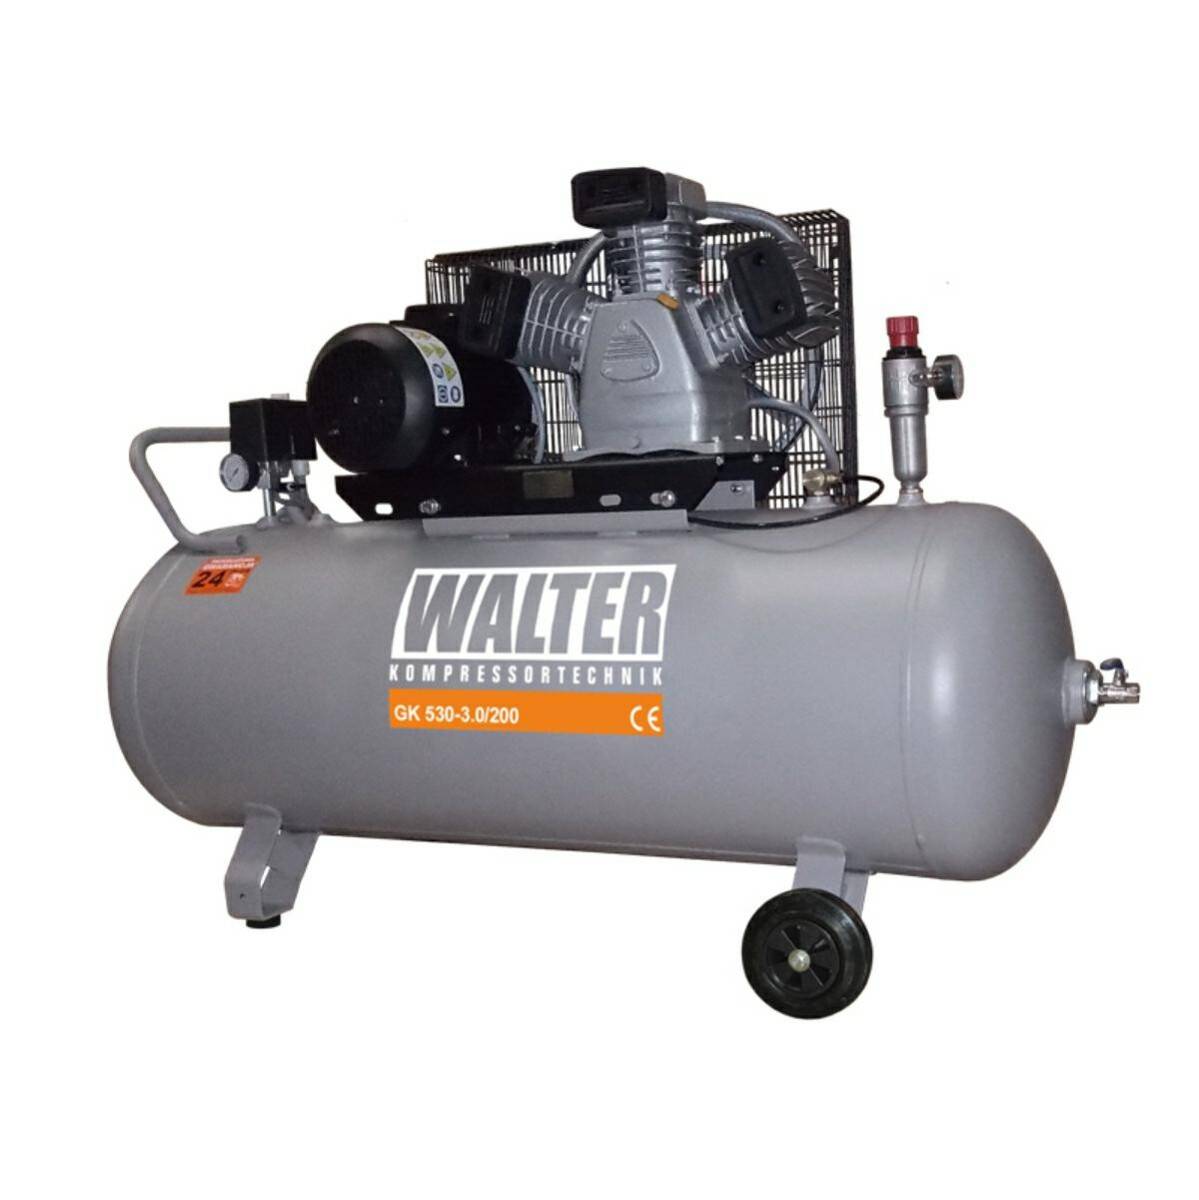 Kompresor Walter GK530-3,0/200 , 200 l